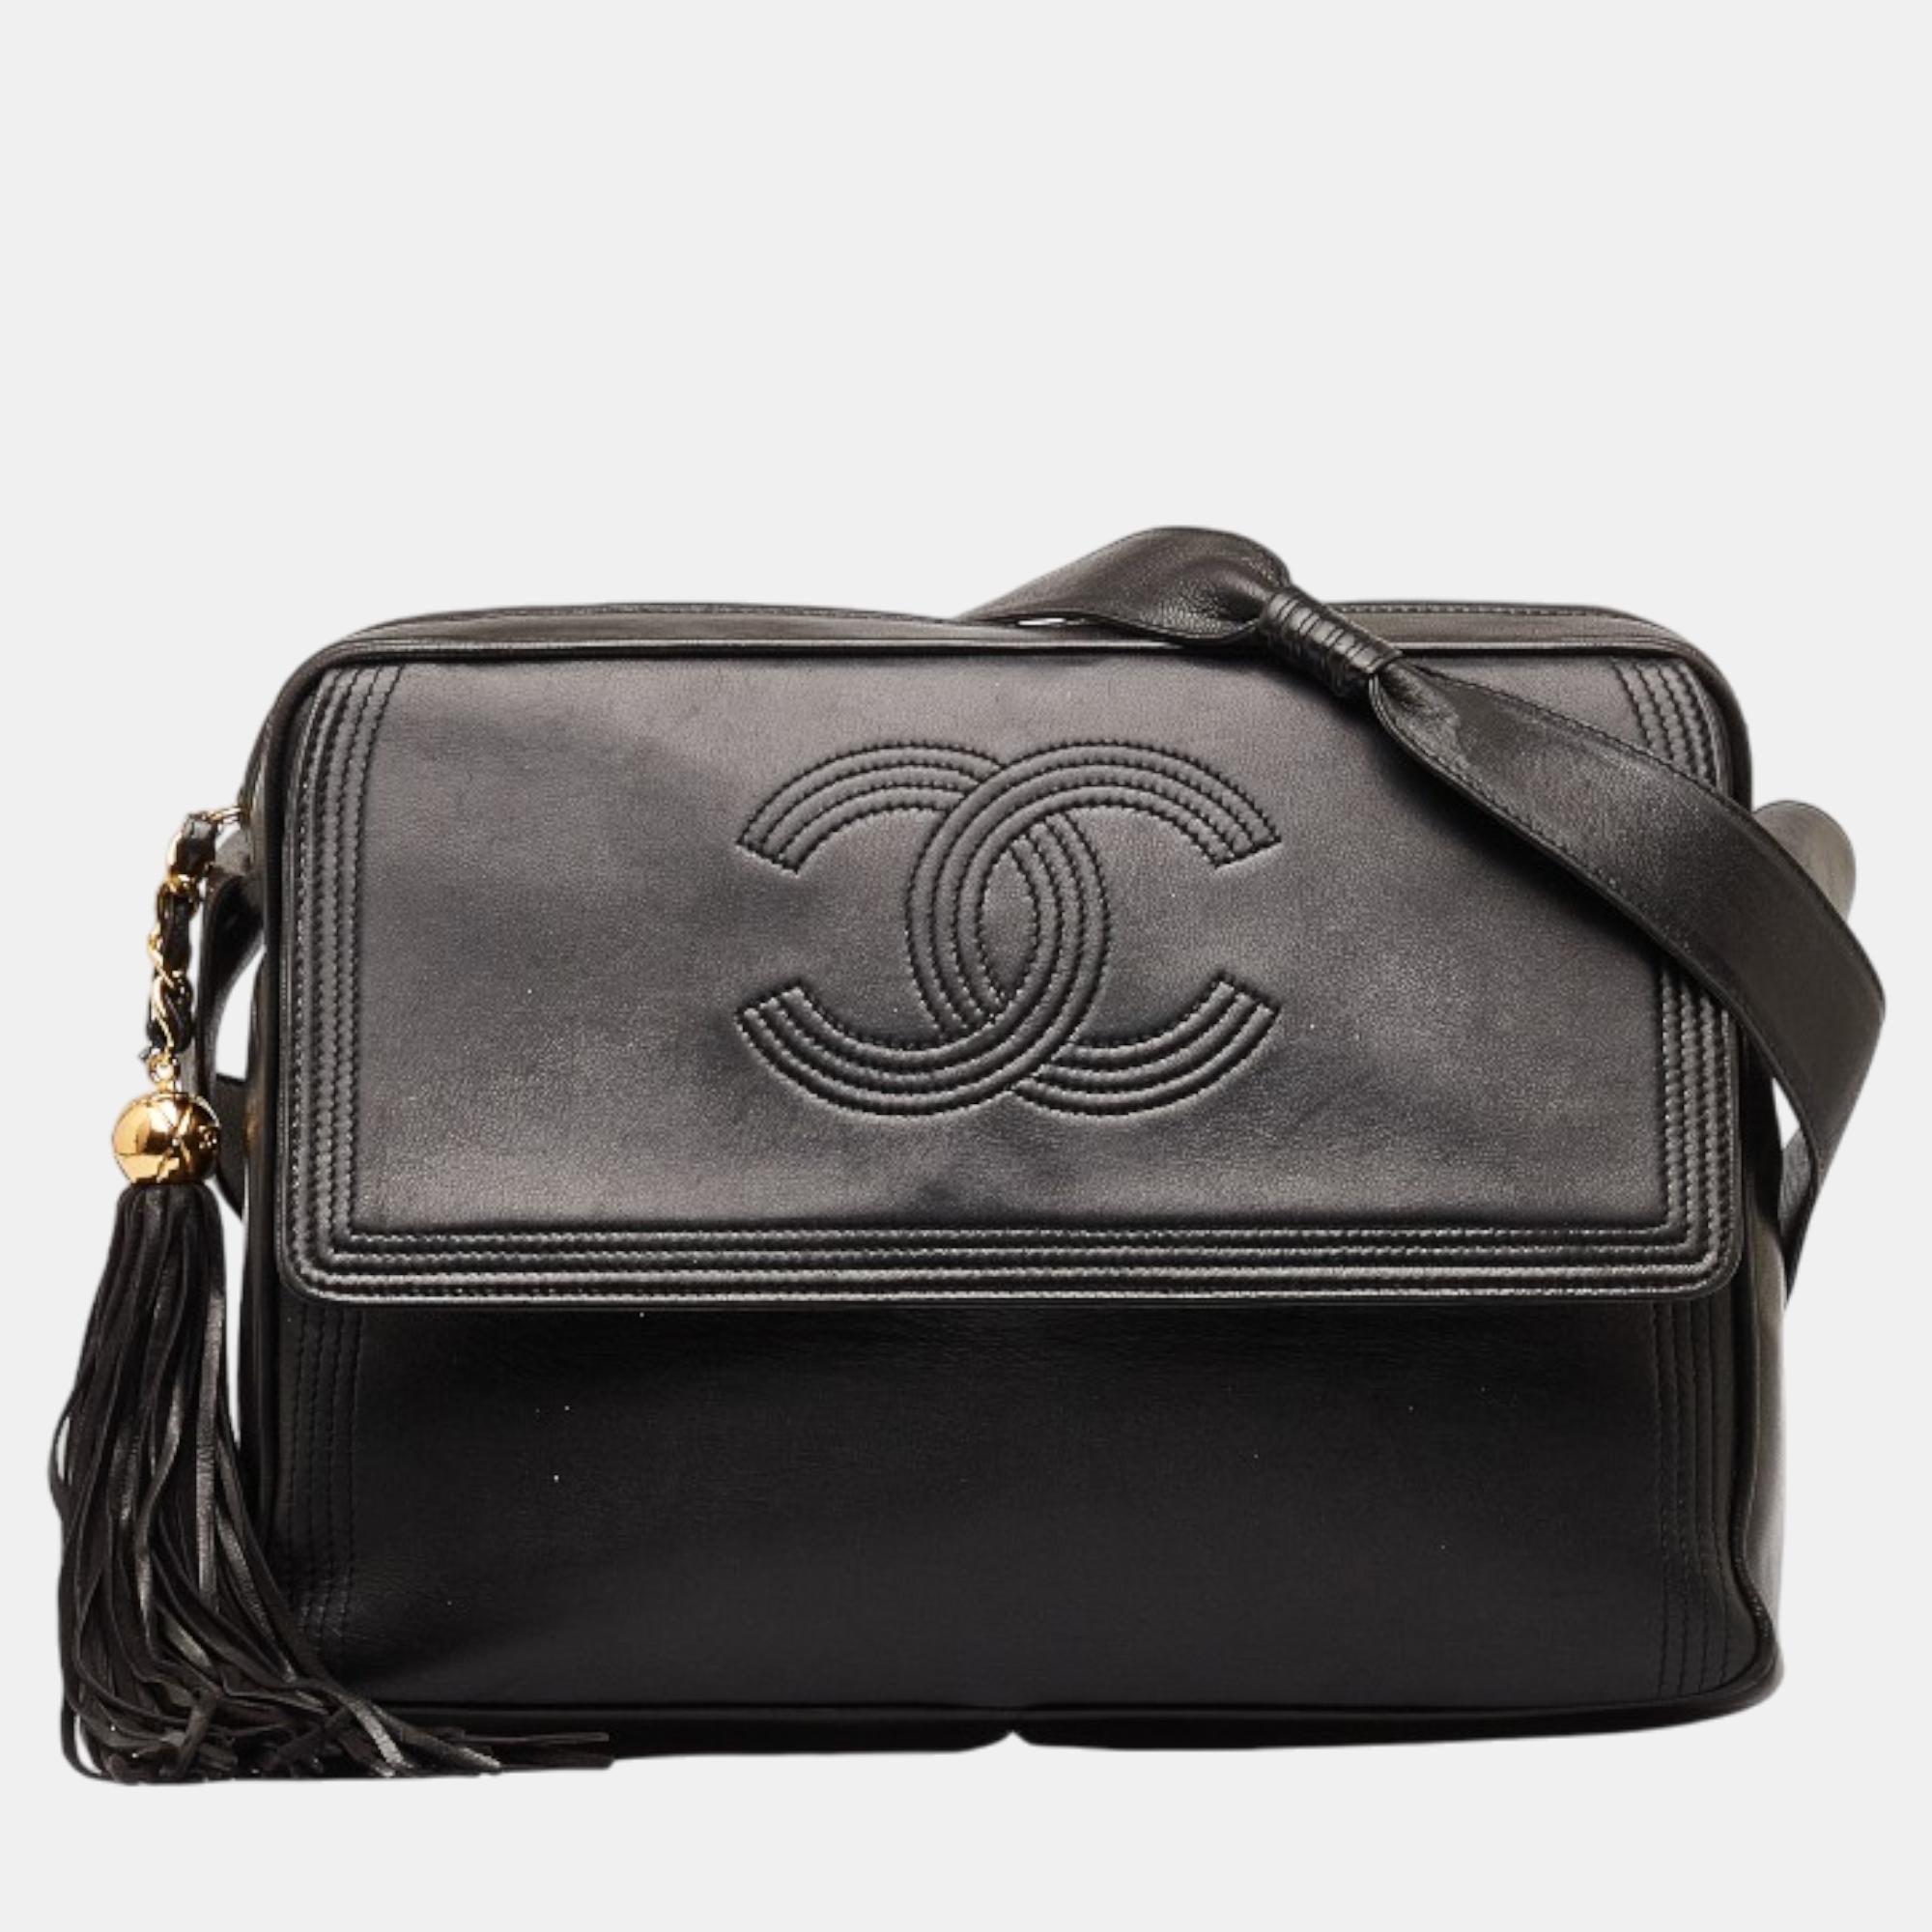 Chanel black leather cc leather fringe camera bag